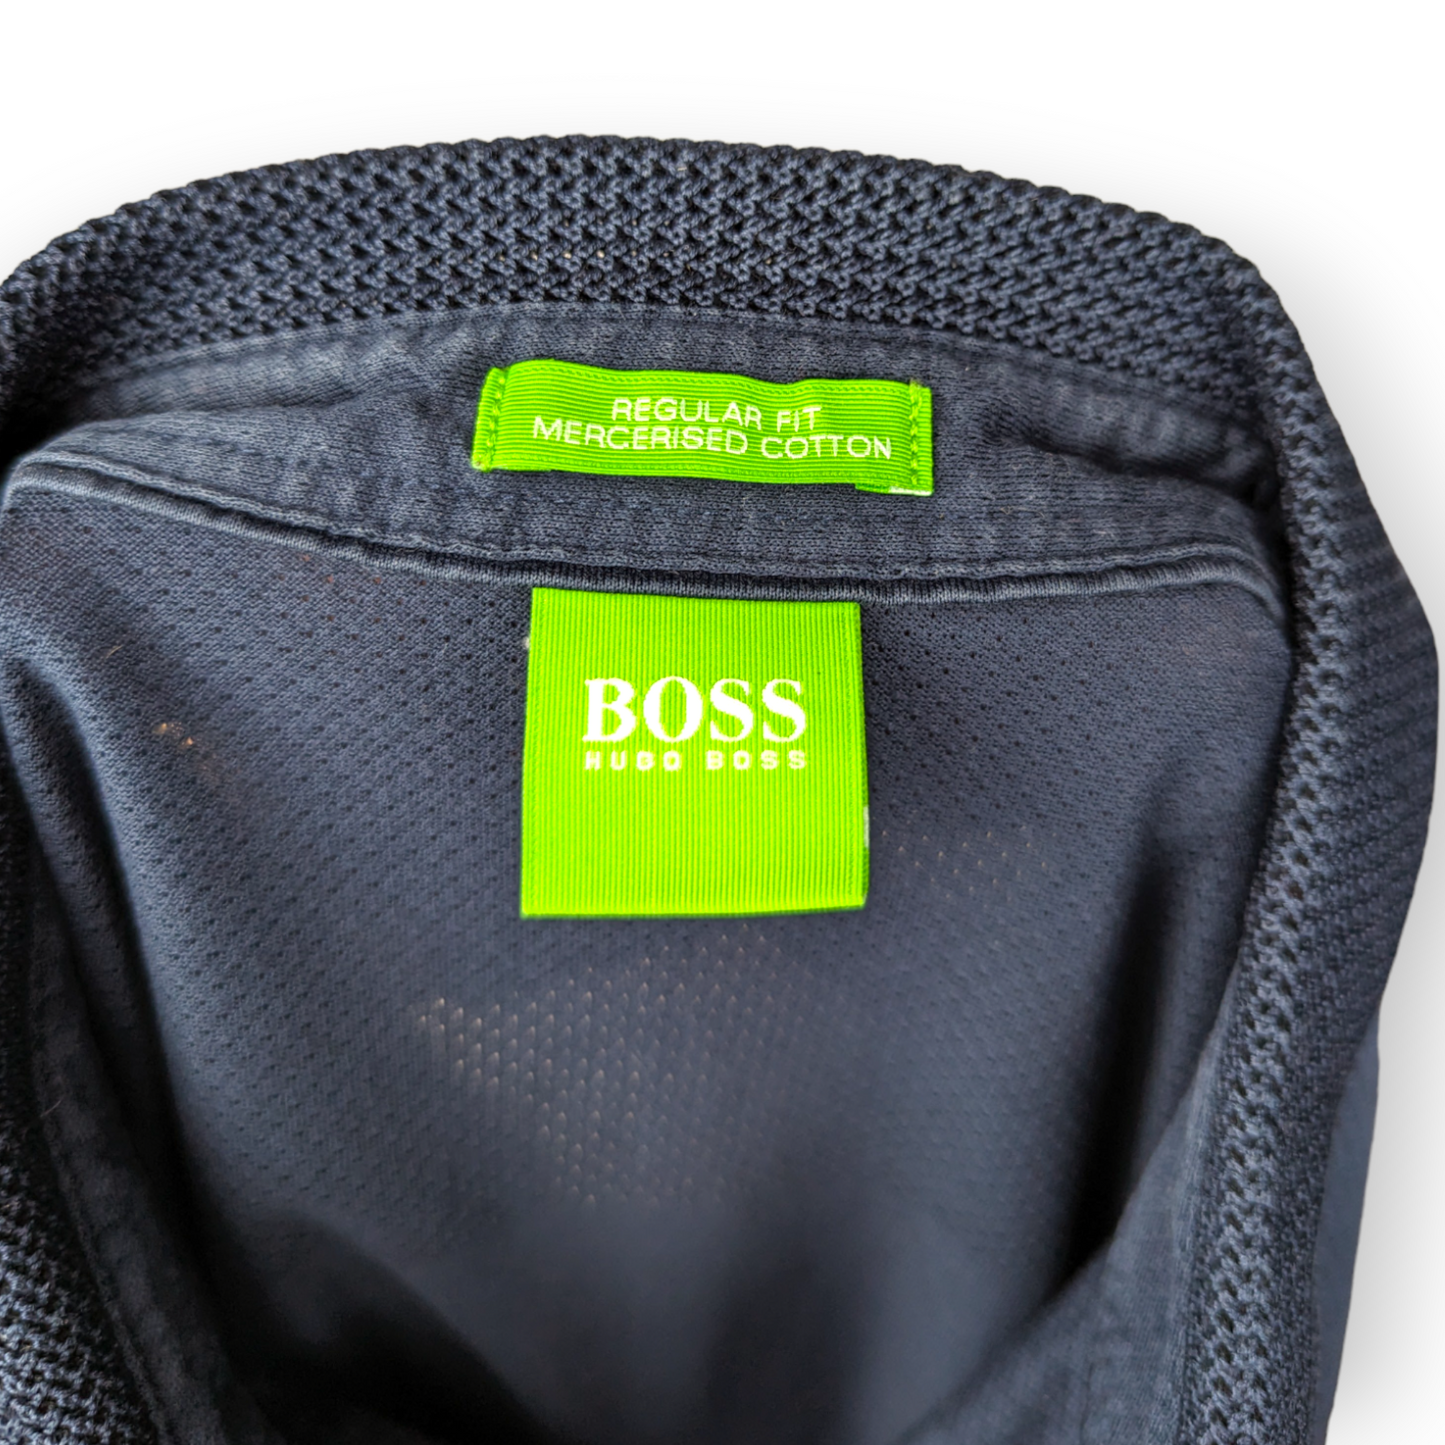 Boss Hugo Boss Blue Regular Fit Mercerized Cotton Polo Shirt Men Size Small